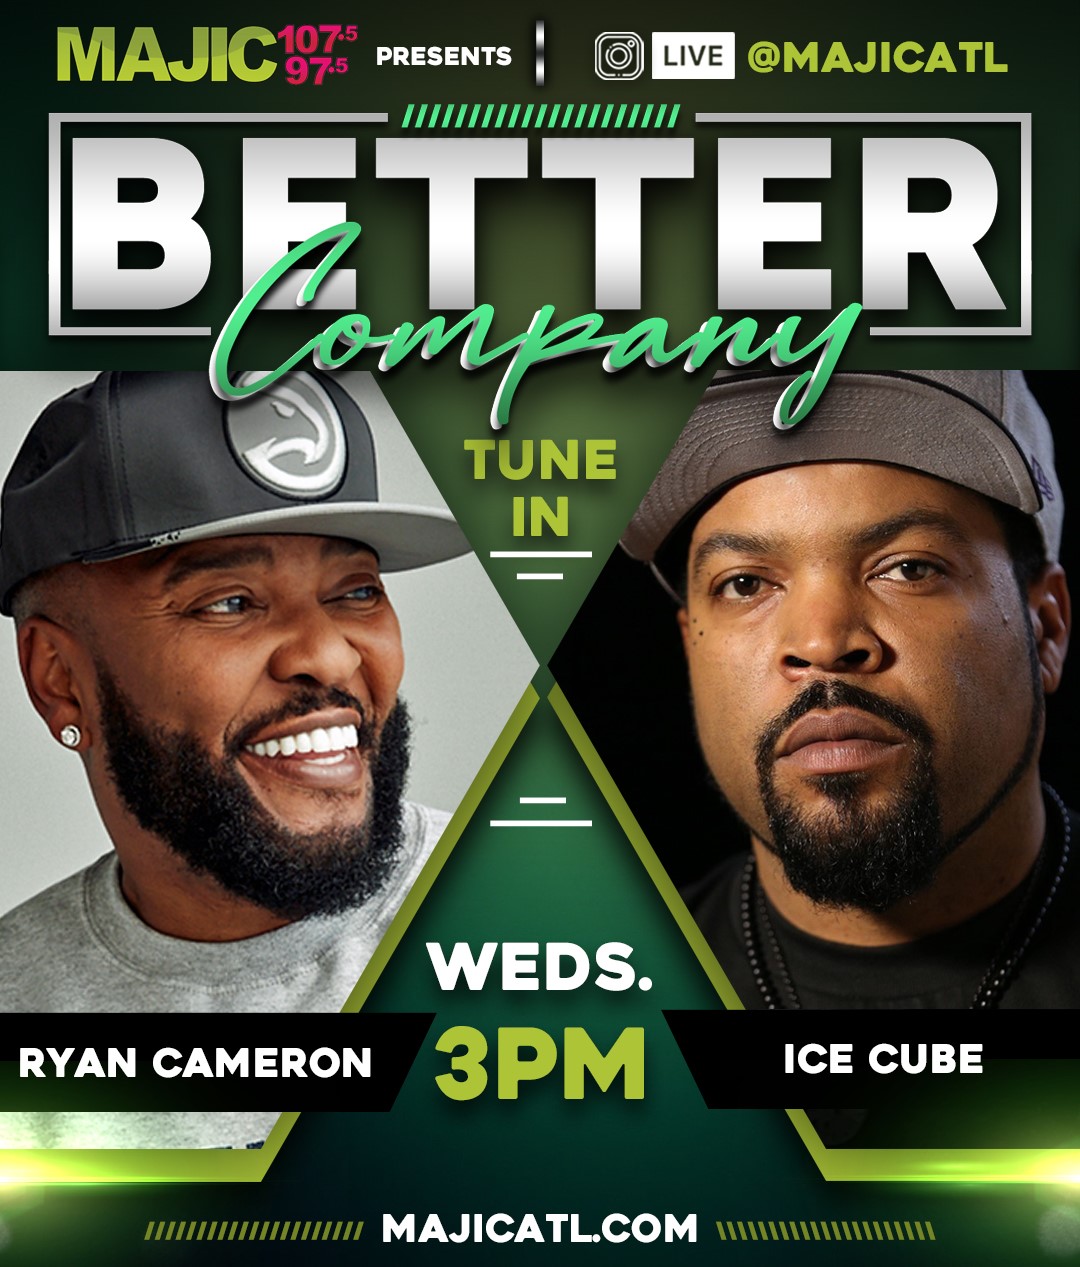 Ice Cube with Ryan Cameron